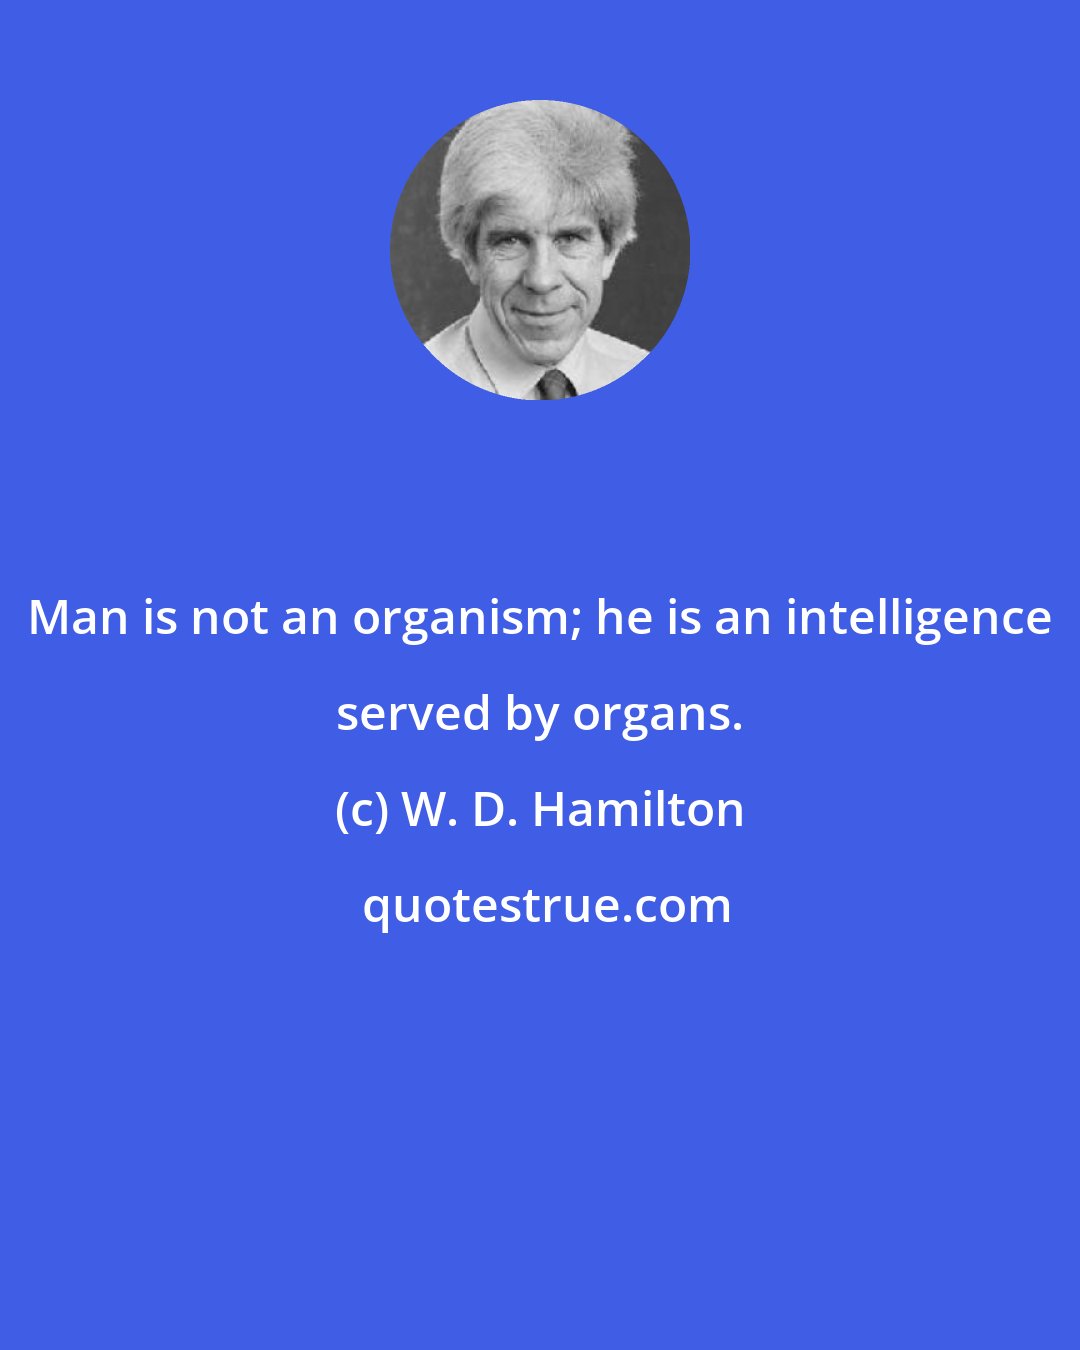 W. D. Hamilton: Man is not an organism; he is an intelligence served by organs.